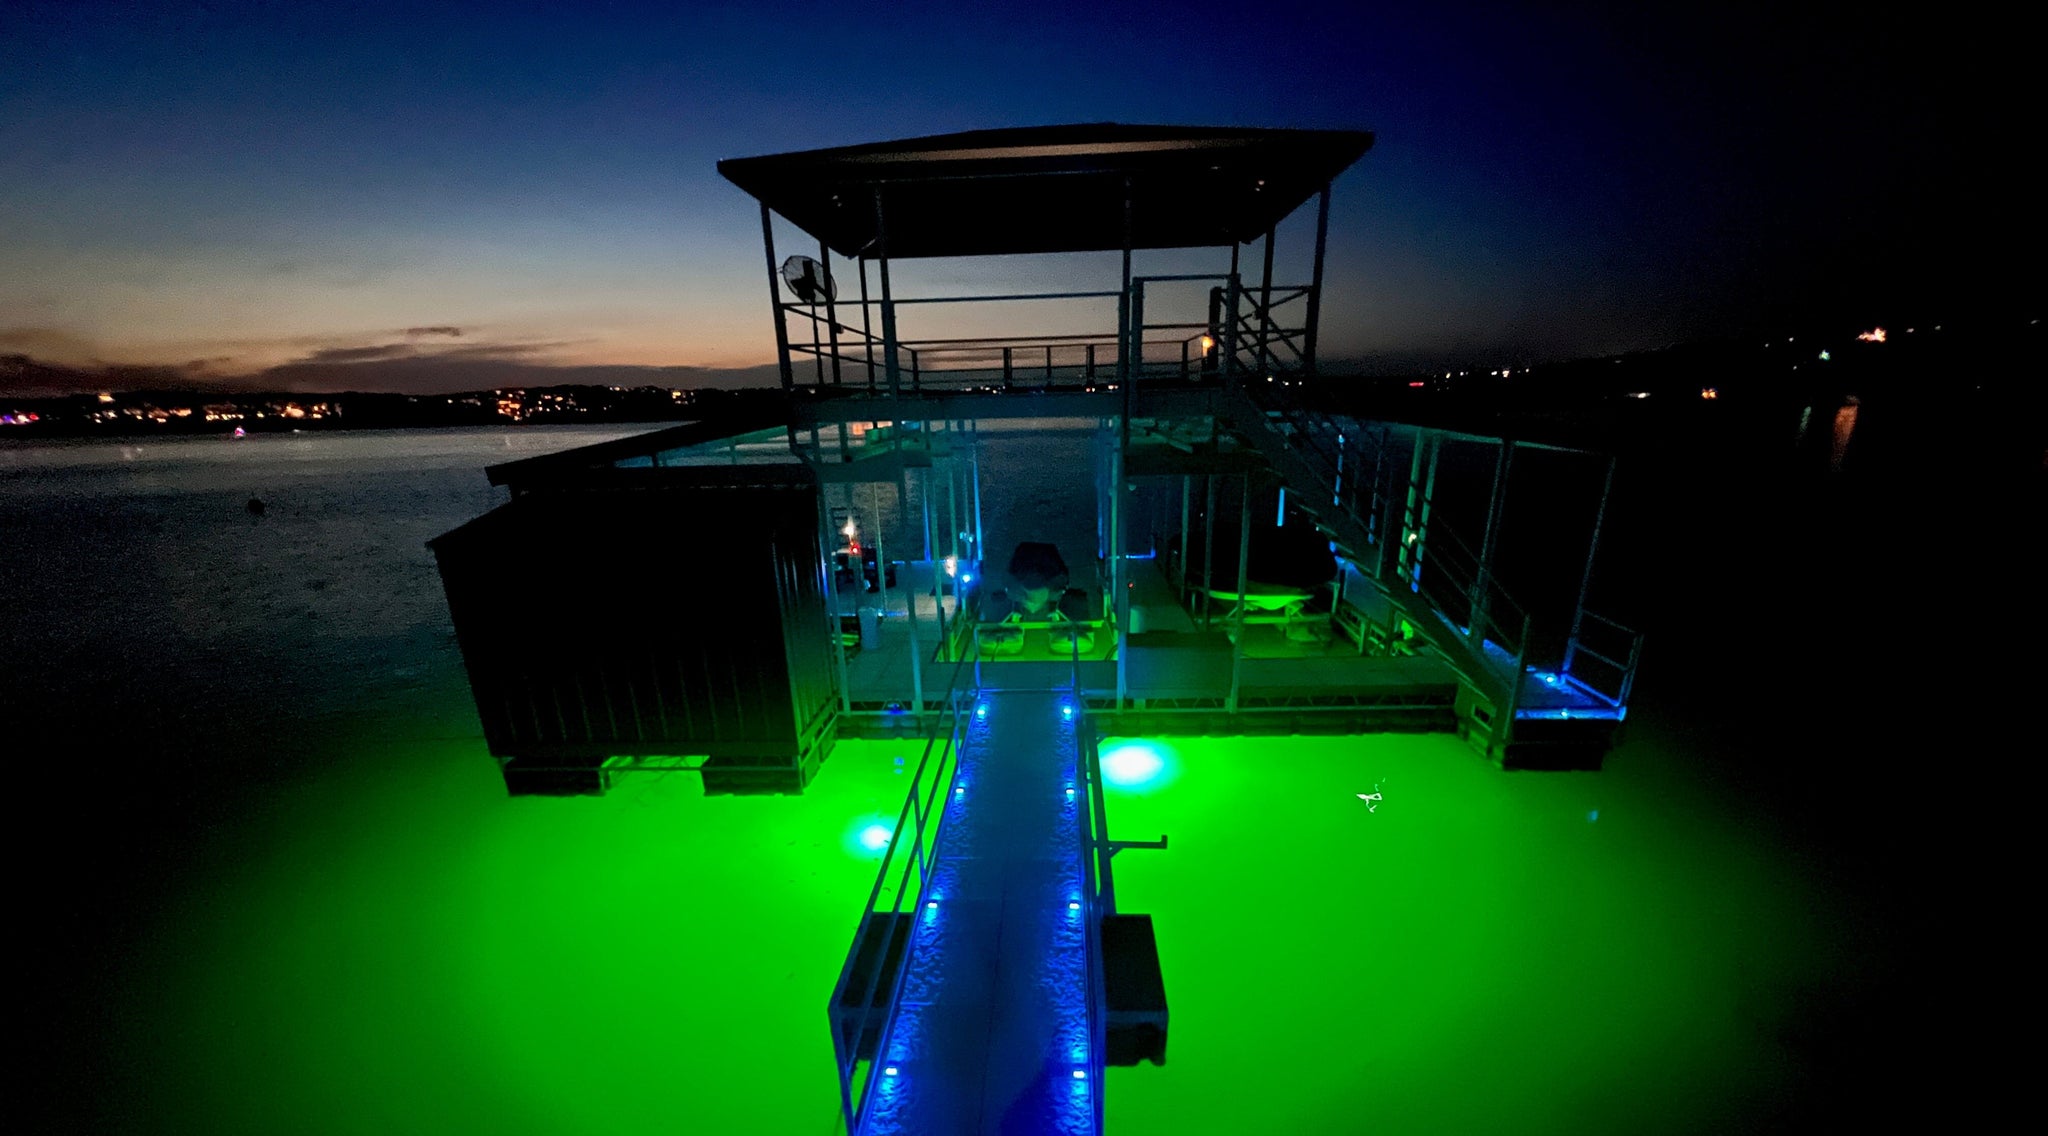 Green Glow Fishing Bobber Lights by Windy City Novelties